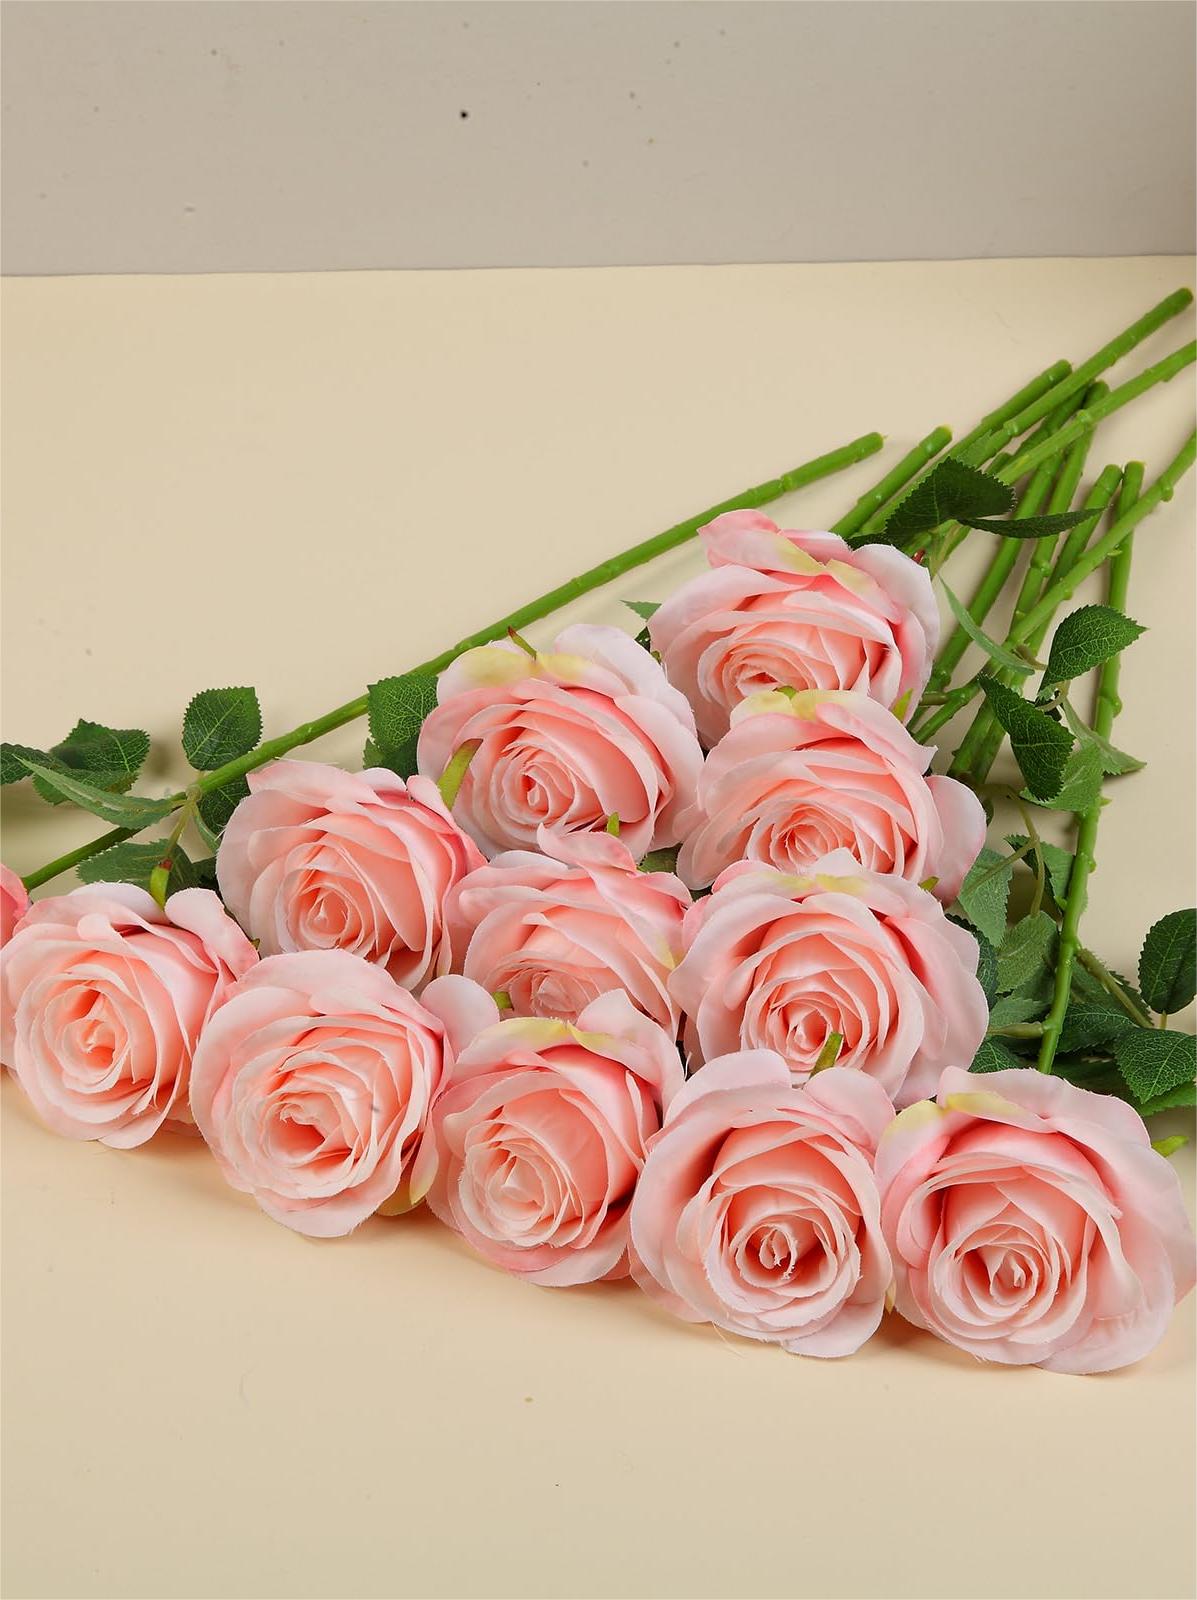 Blush Artificial Rose Flowers With Long Stems Wedding Bouquet Centerpieces Decorations HH8045